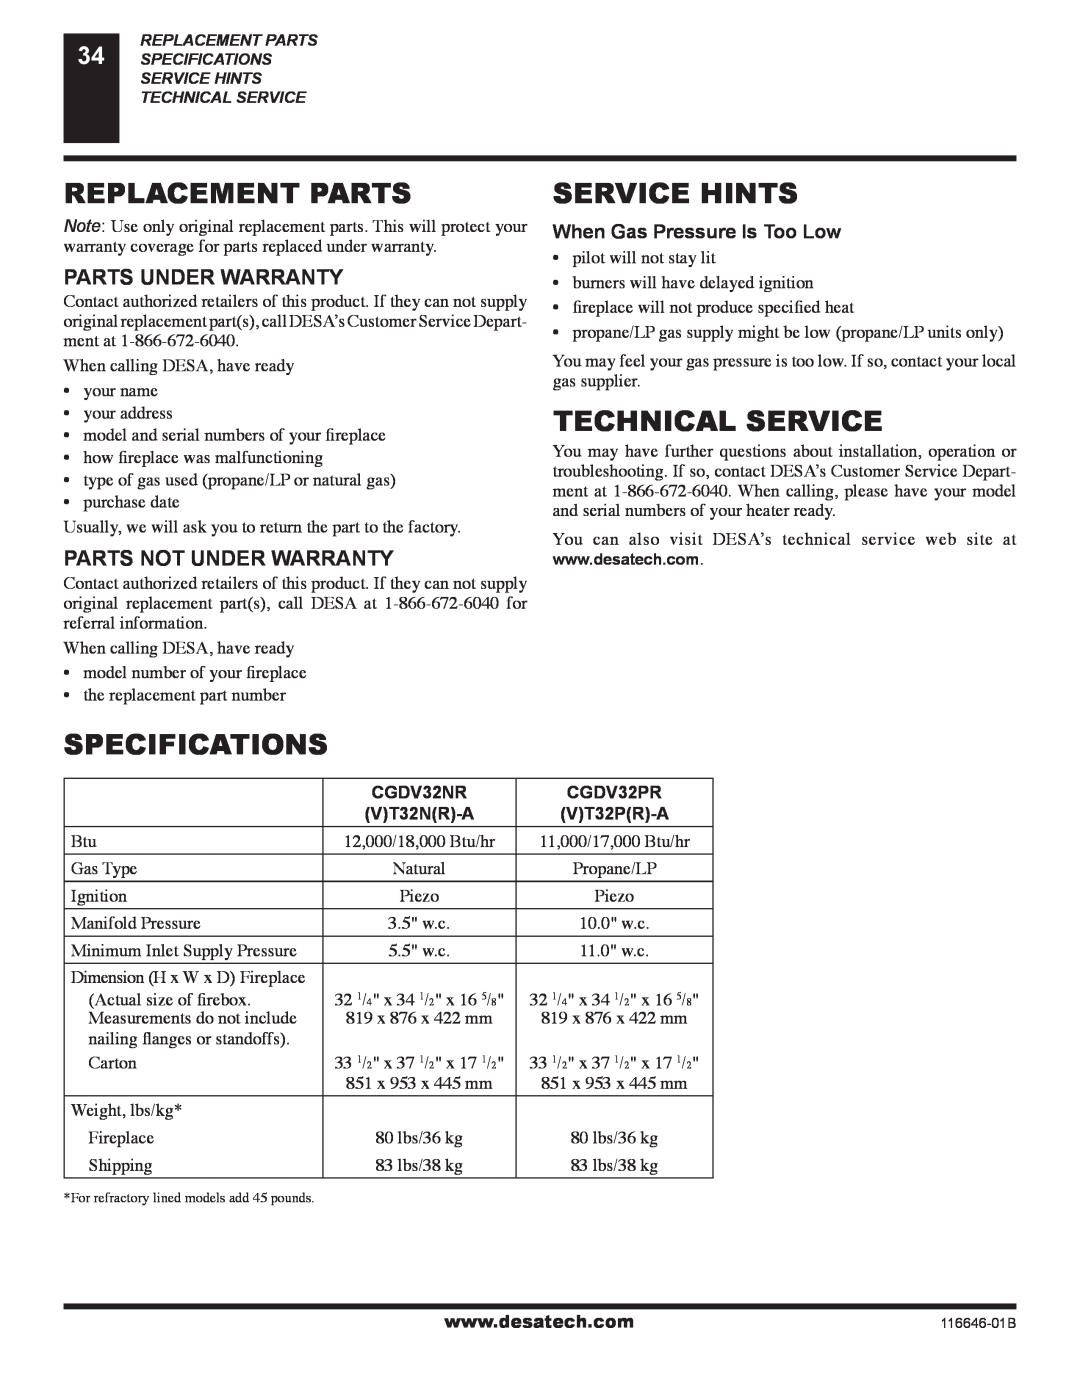 Desa T32N-A, CGDV32NR, T32P-A, CGDV32PR Replacement Parts, Service Hints, Technical Service, Specifications 